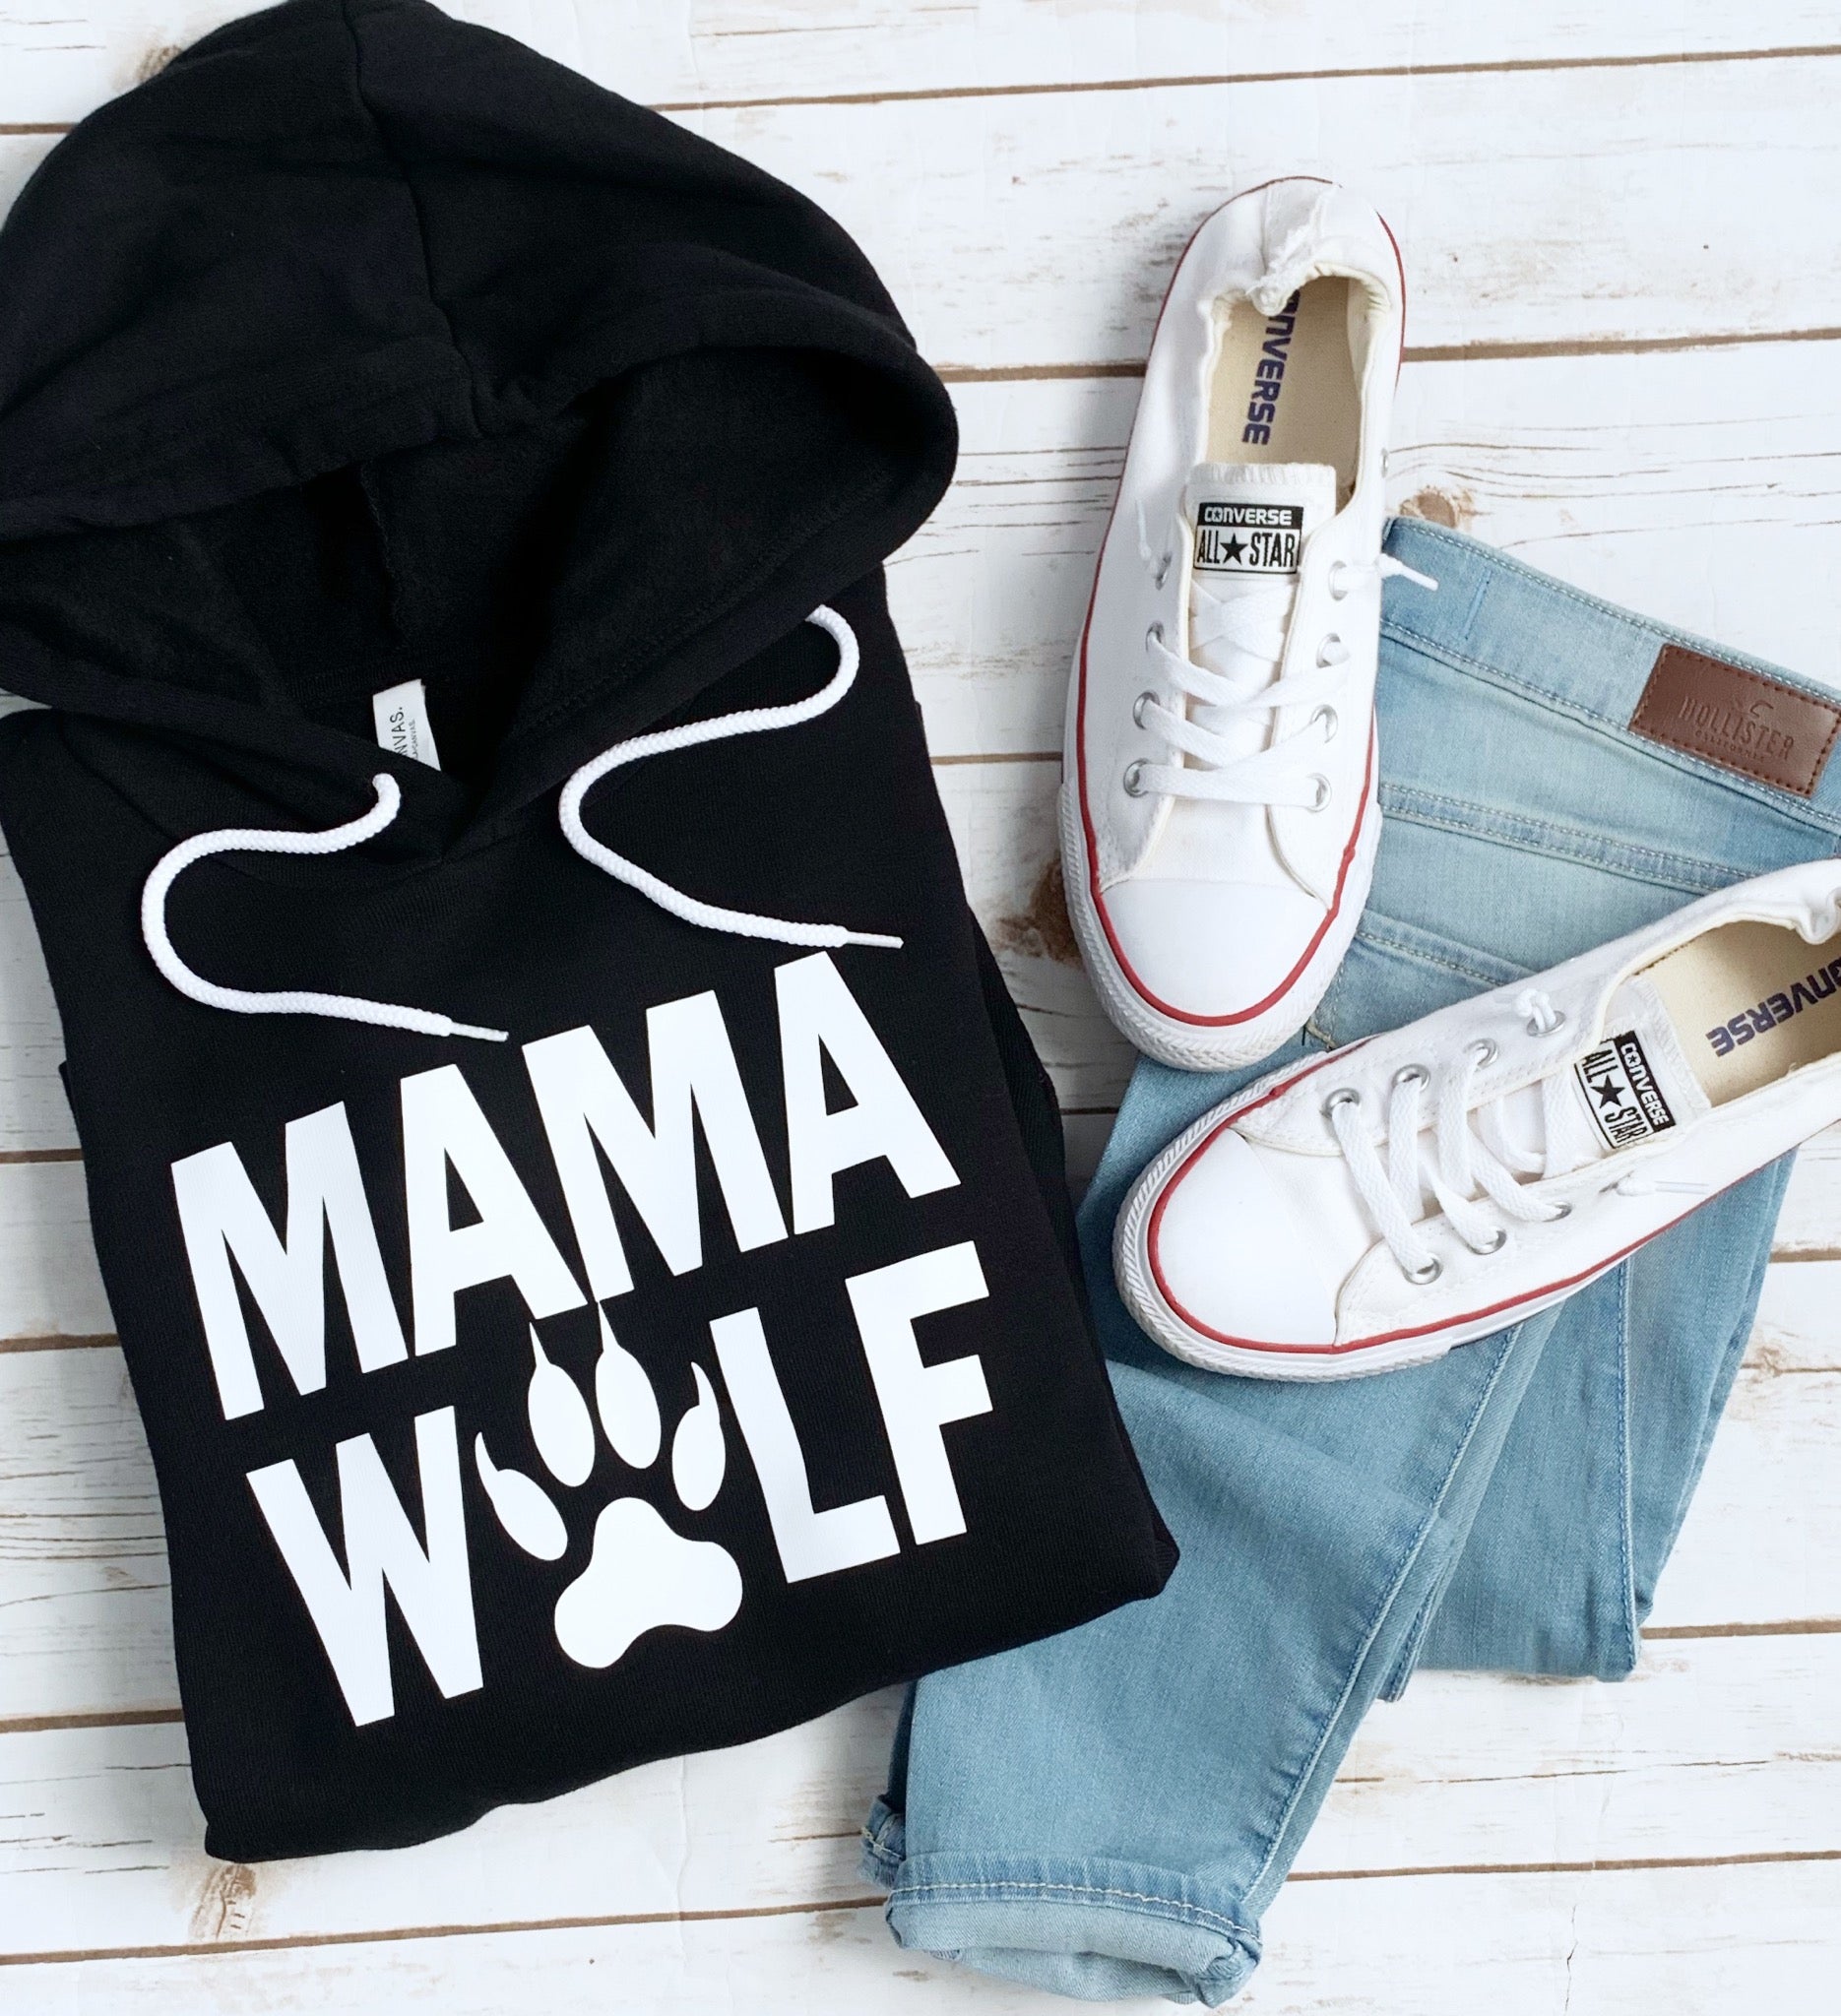 Mama Wolf